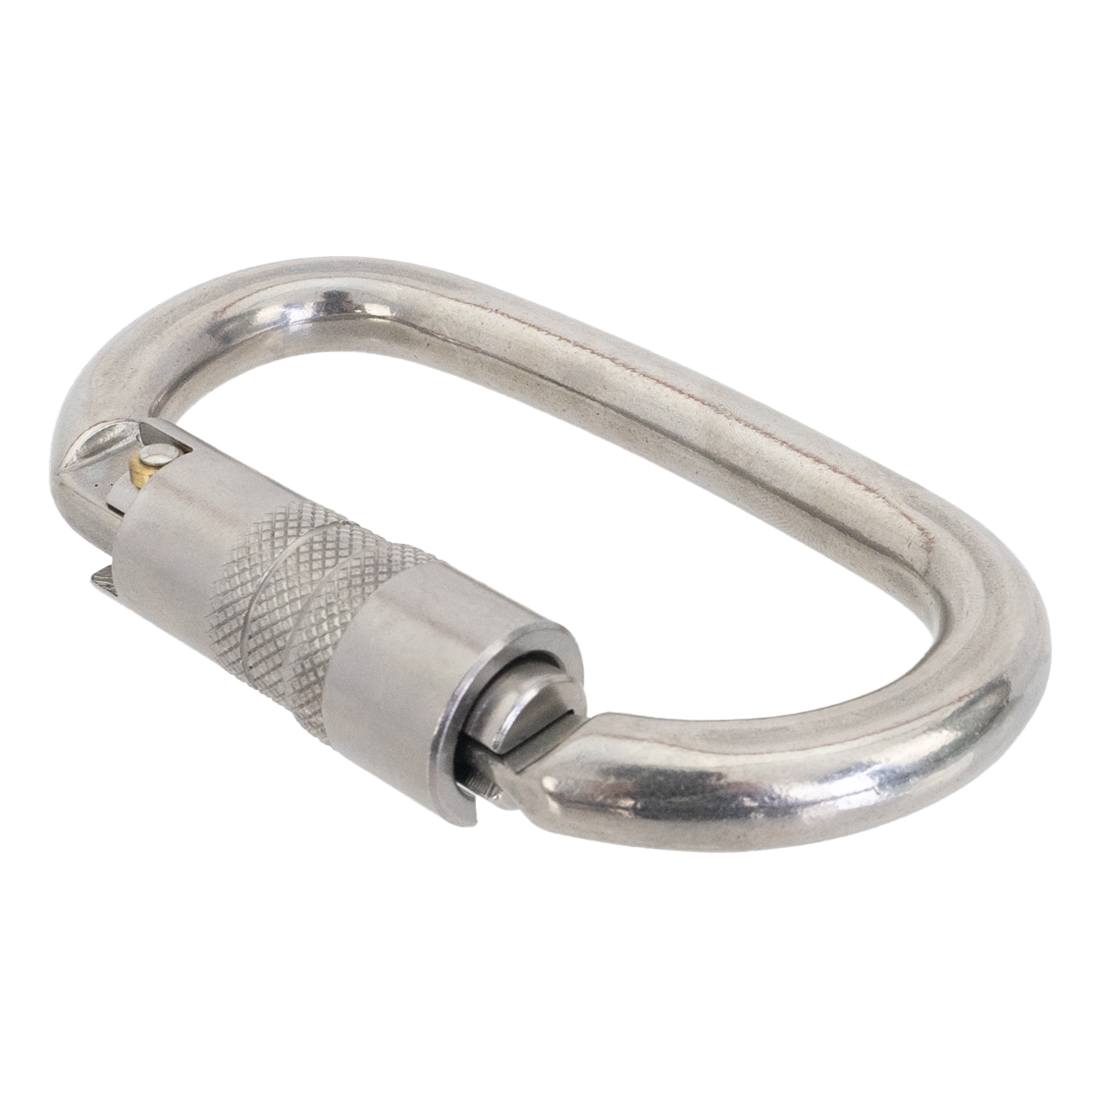 3/16 Stainless Steel Carabiner Snap Hook with Locking Screw